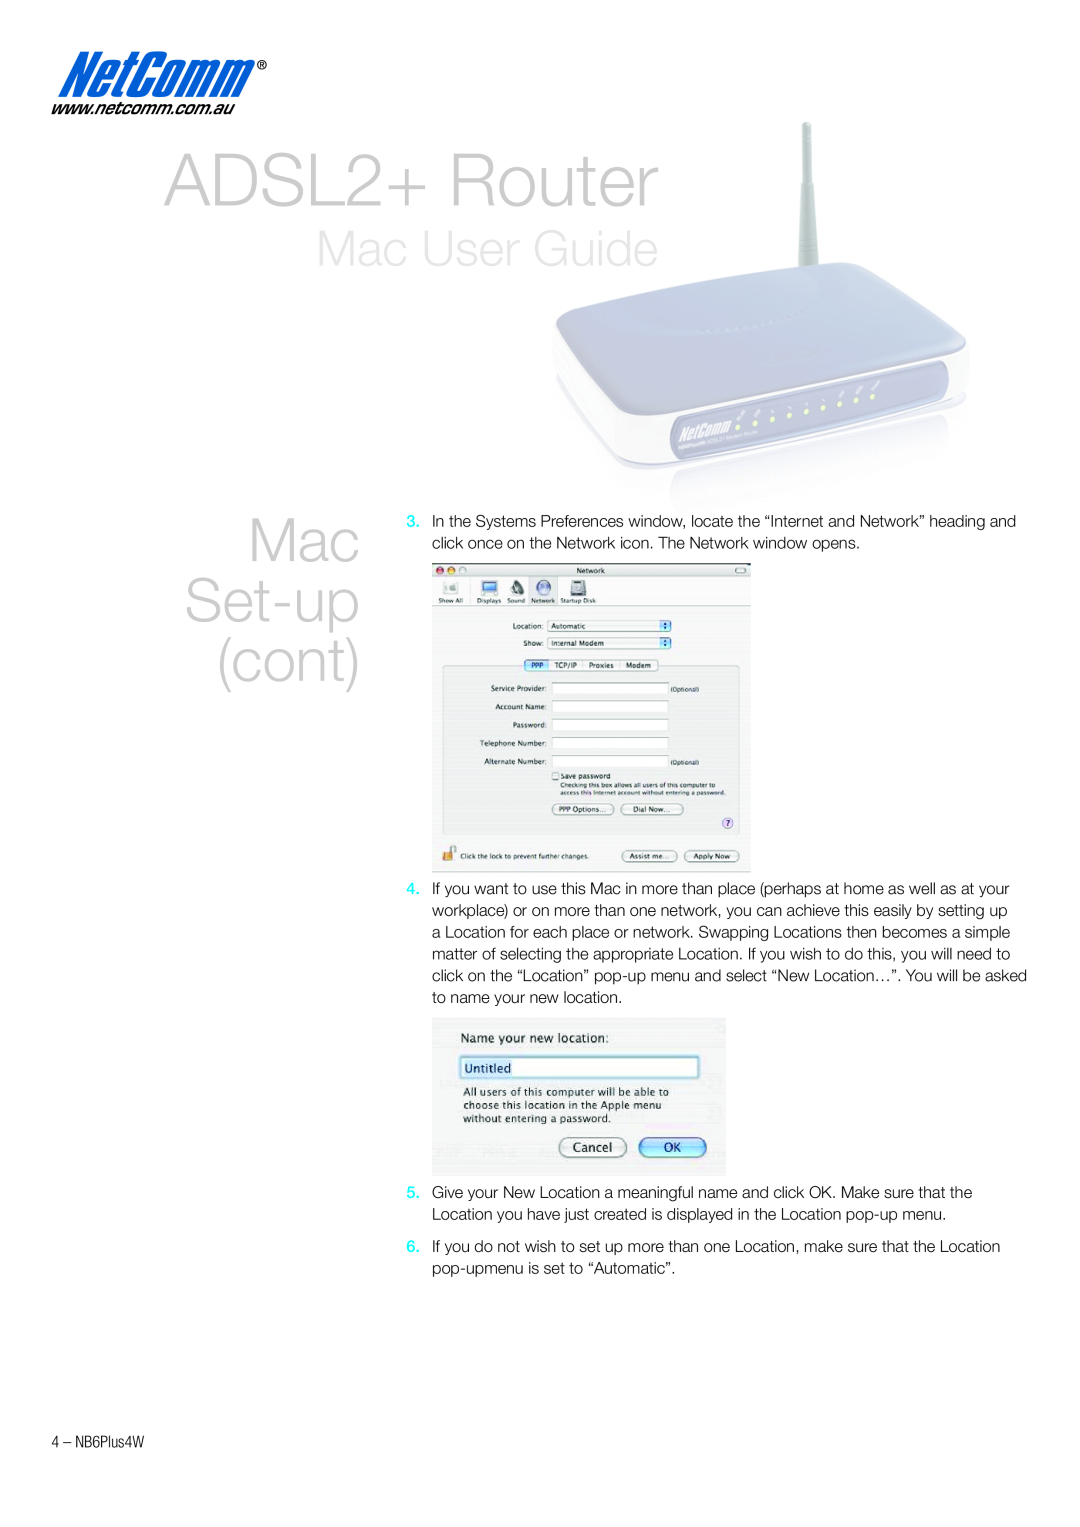 NetComm NB6PLUS4W quick start Mac Set-up cont, ADSL2+ Router, Mac User Guide 